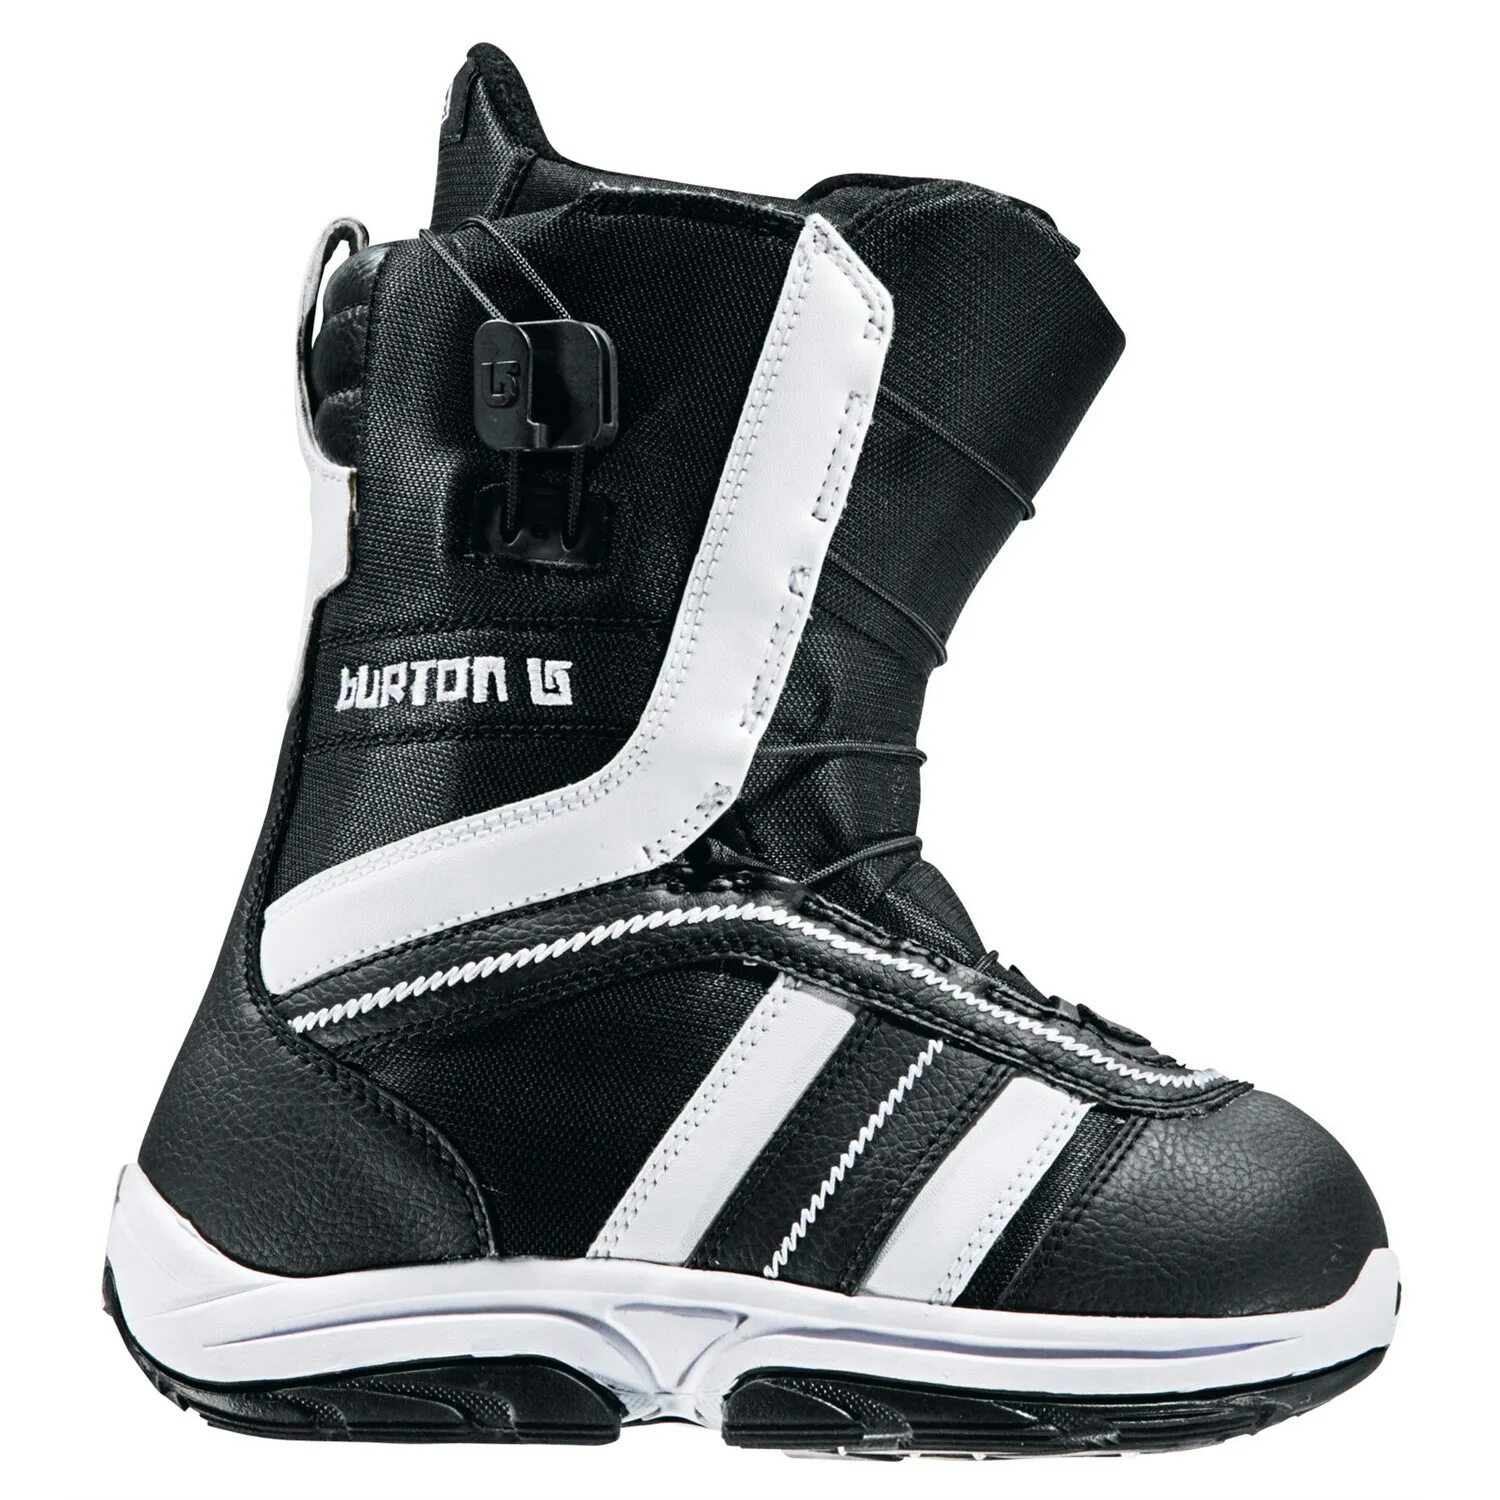 Burton Ruler 2022. Burton Ruler smalls ботинки для сноуборда. Burton Concord Snowboard Boots. Ботинки Burton 2009. Burton ruler